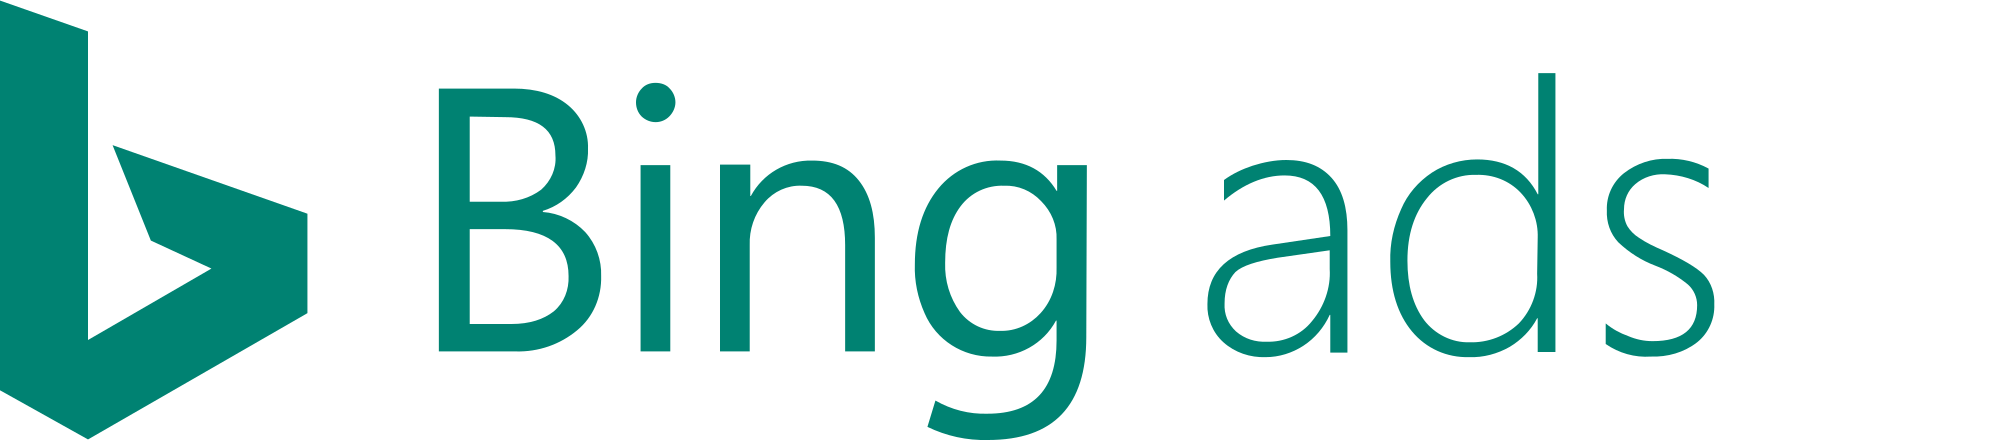 Bing Teal Logo - File:Bing Ads 2016 logo.svg - Wikimedia Commons